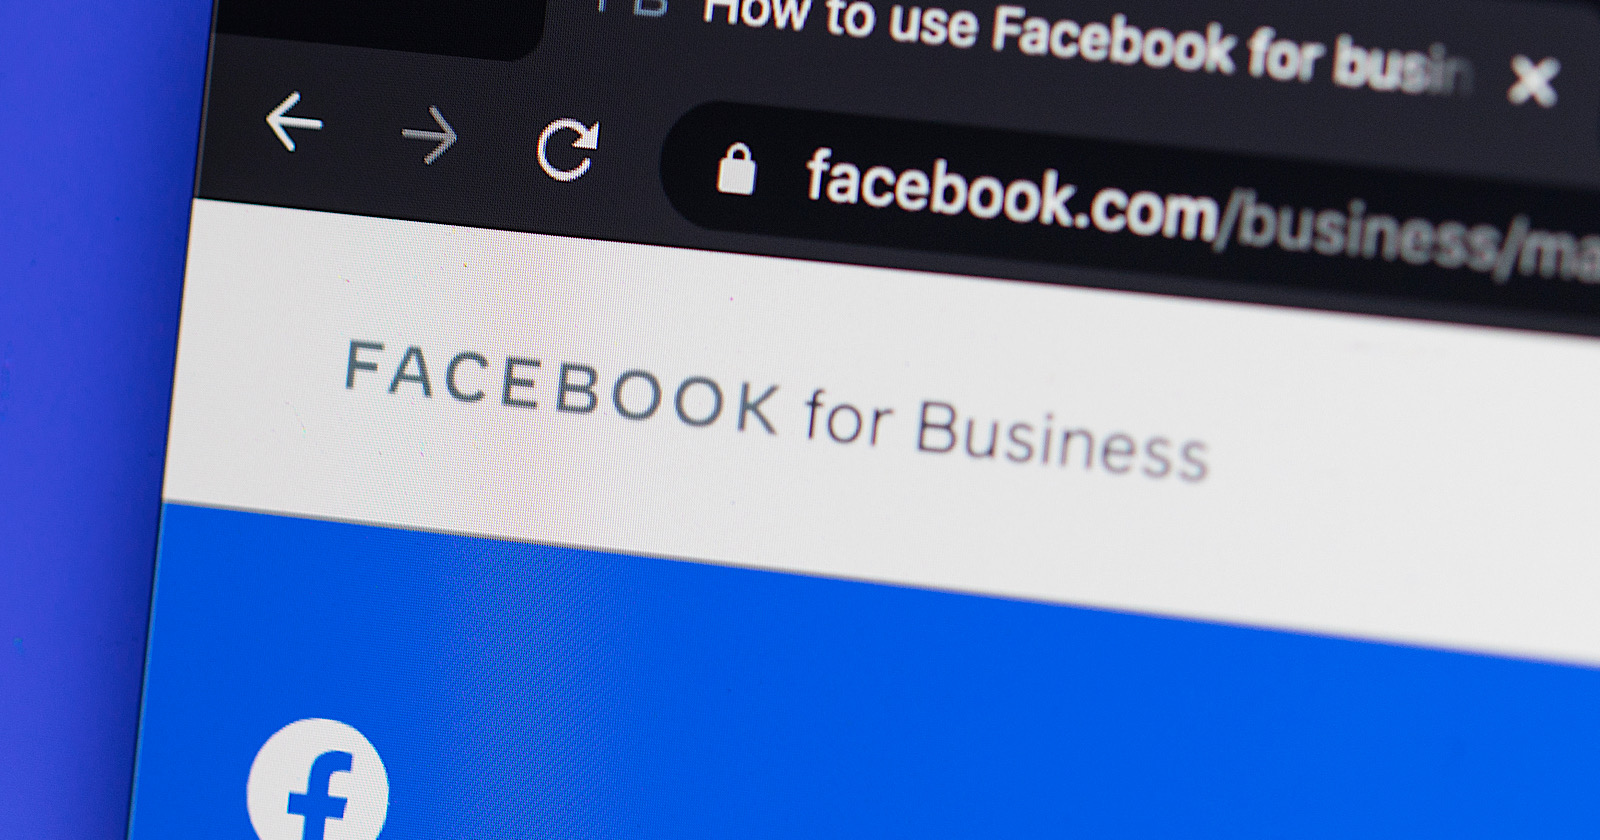 facebook business suite combines pages, instagram, &amp; messenger tools